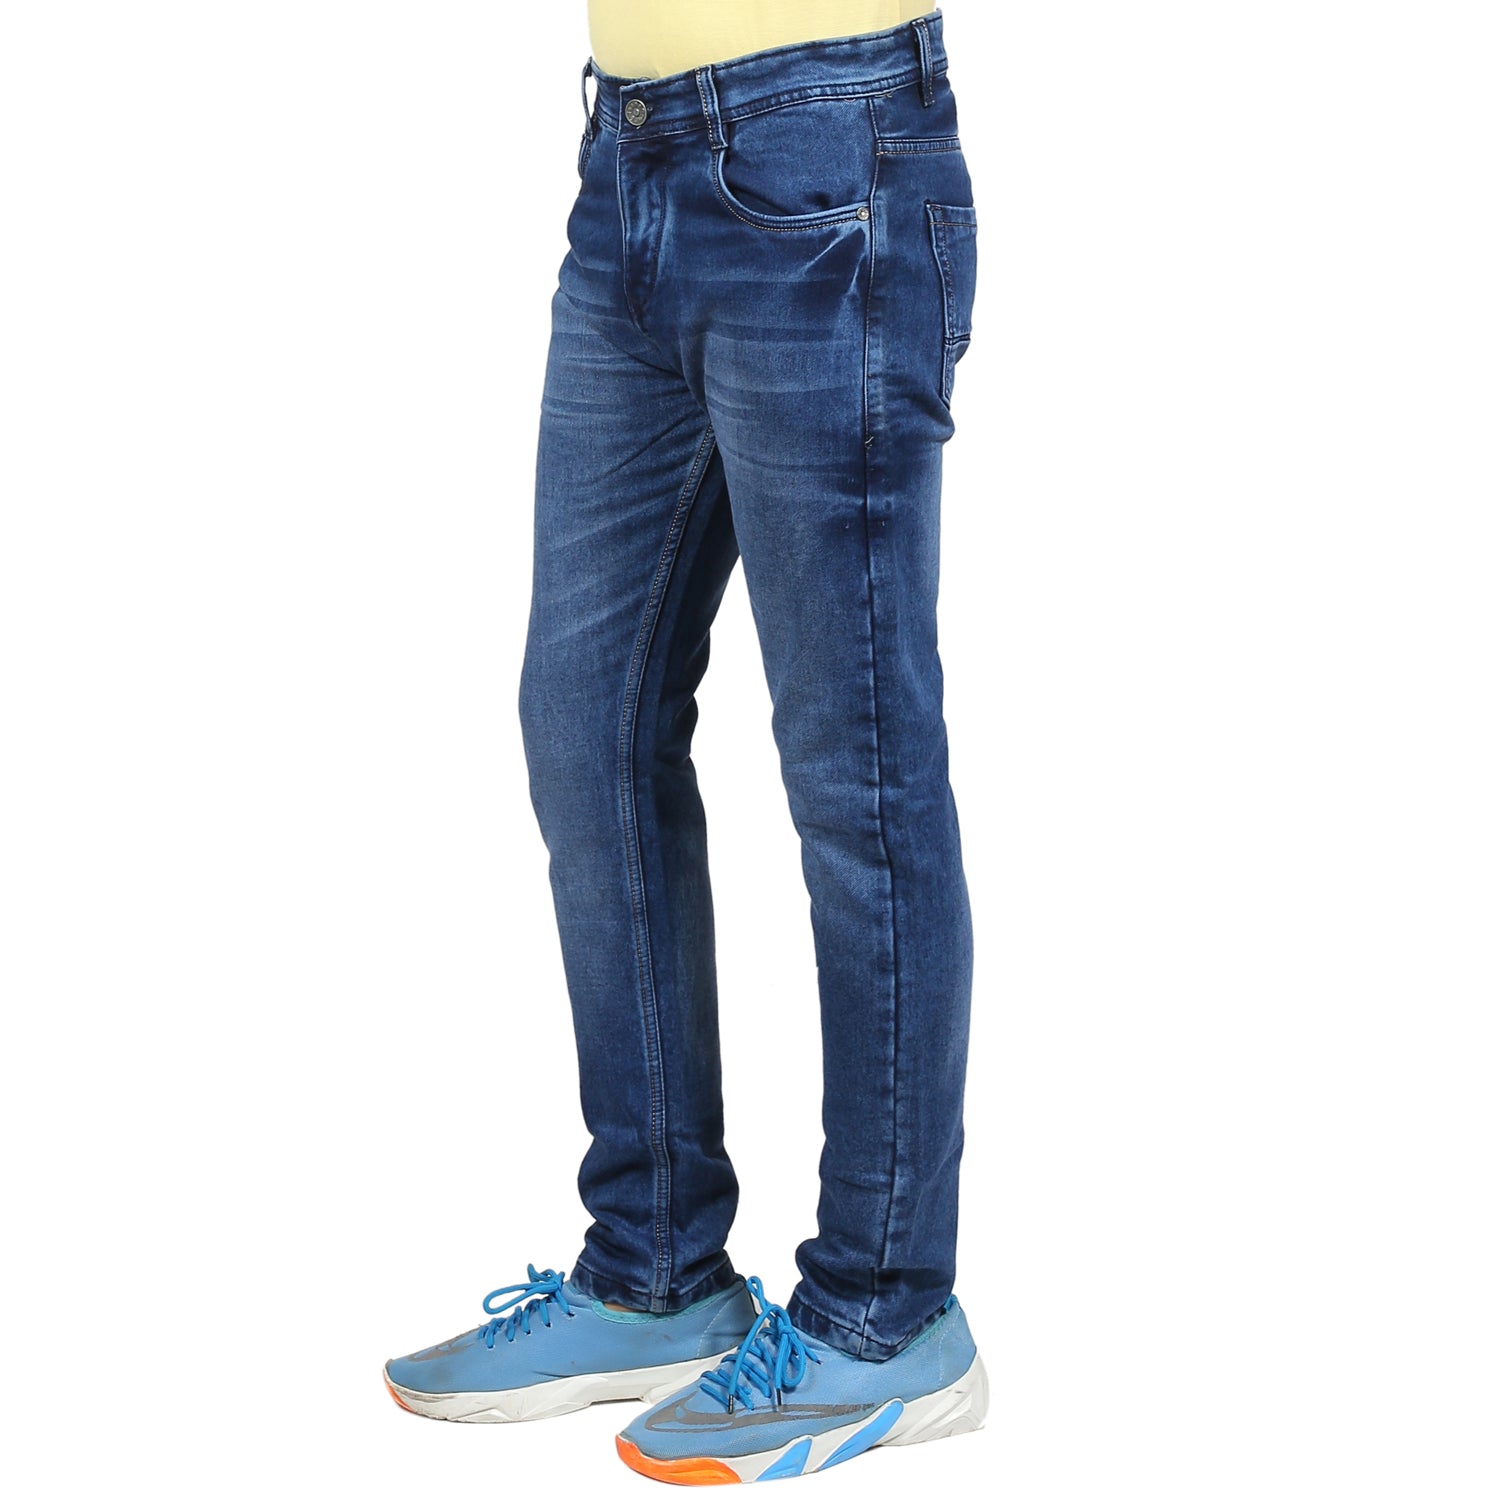 Straight Built-In Flex Jeans for Men | Old Navy